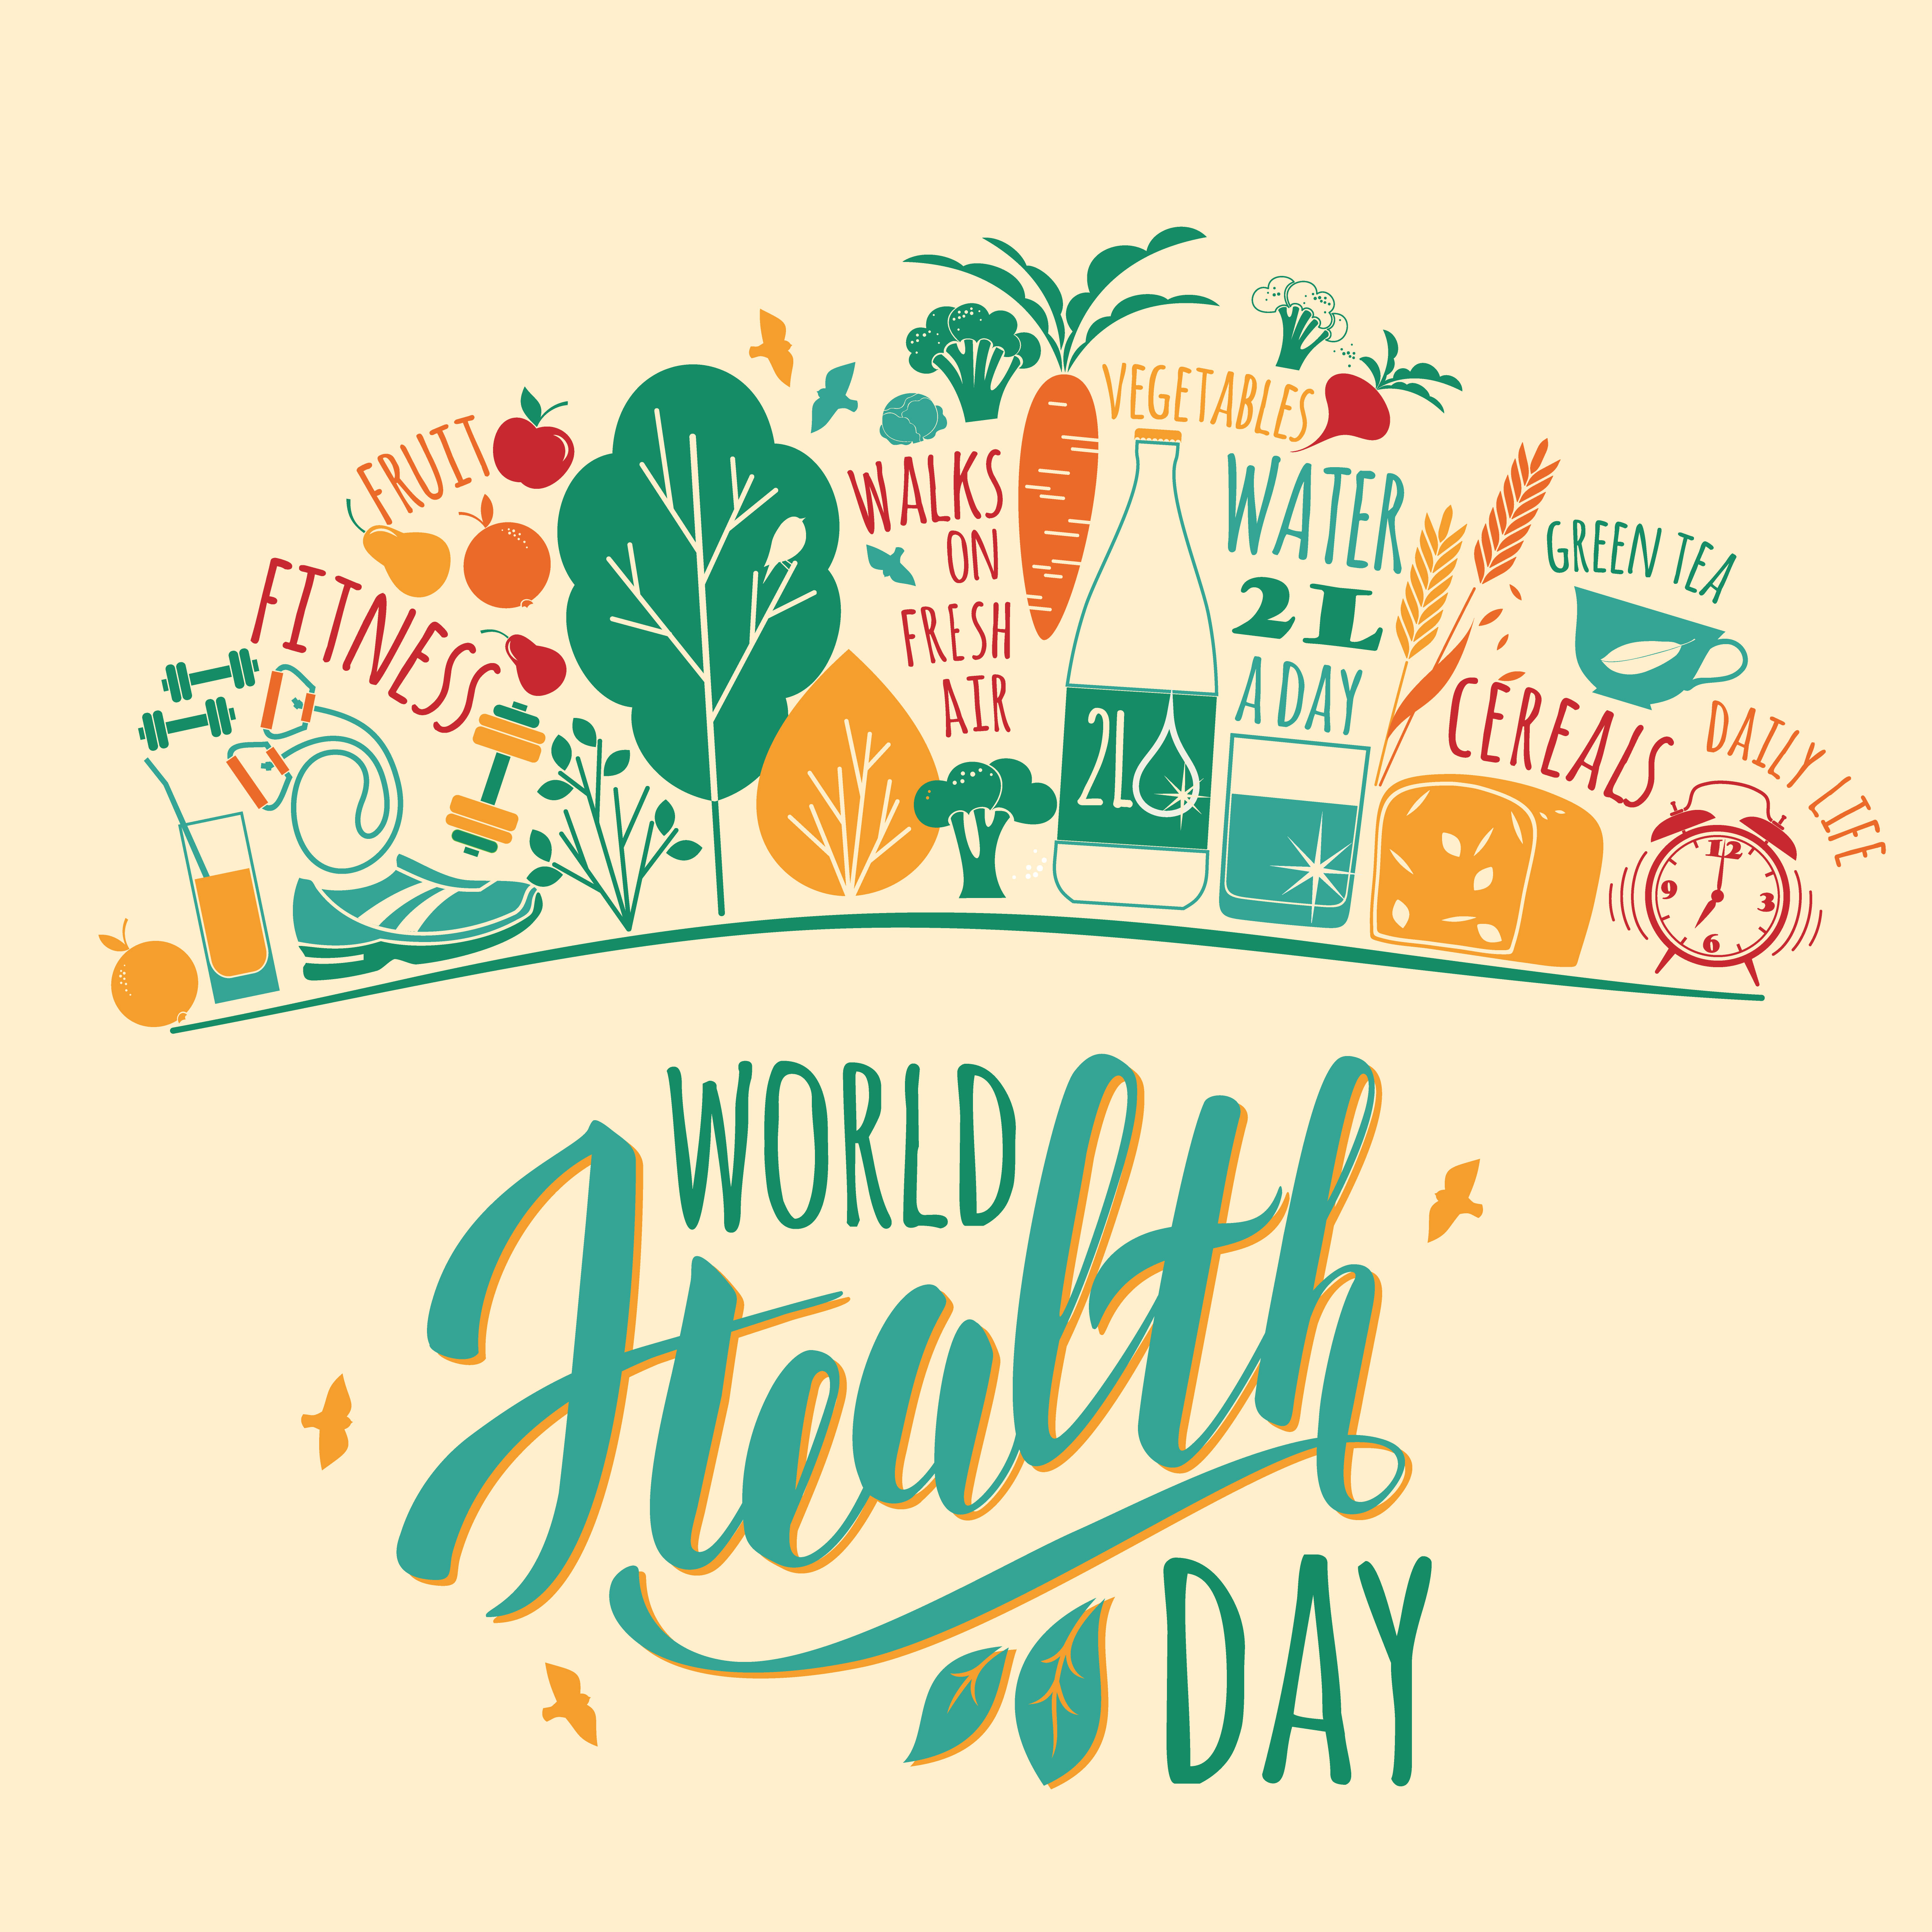 world-health-day-vector-illustration-297940-vector-art-at-vecteezy